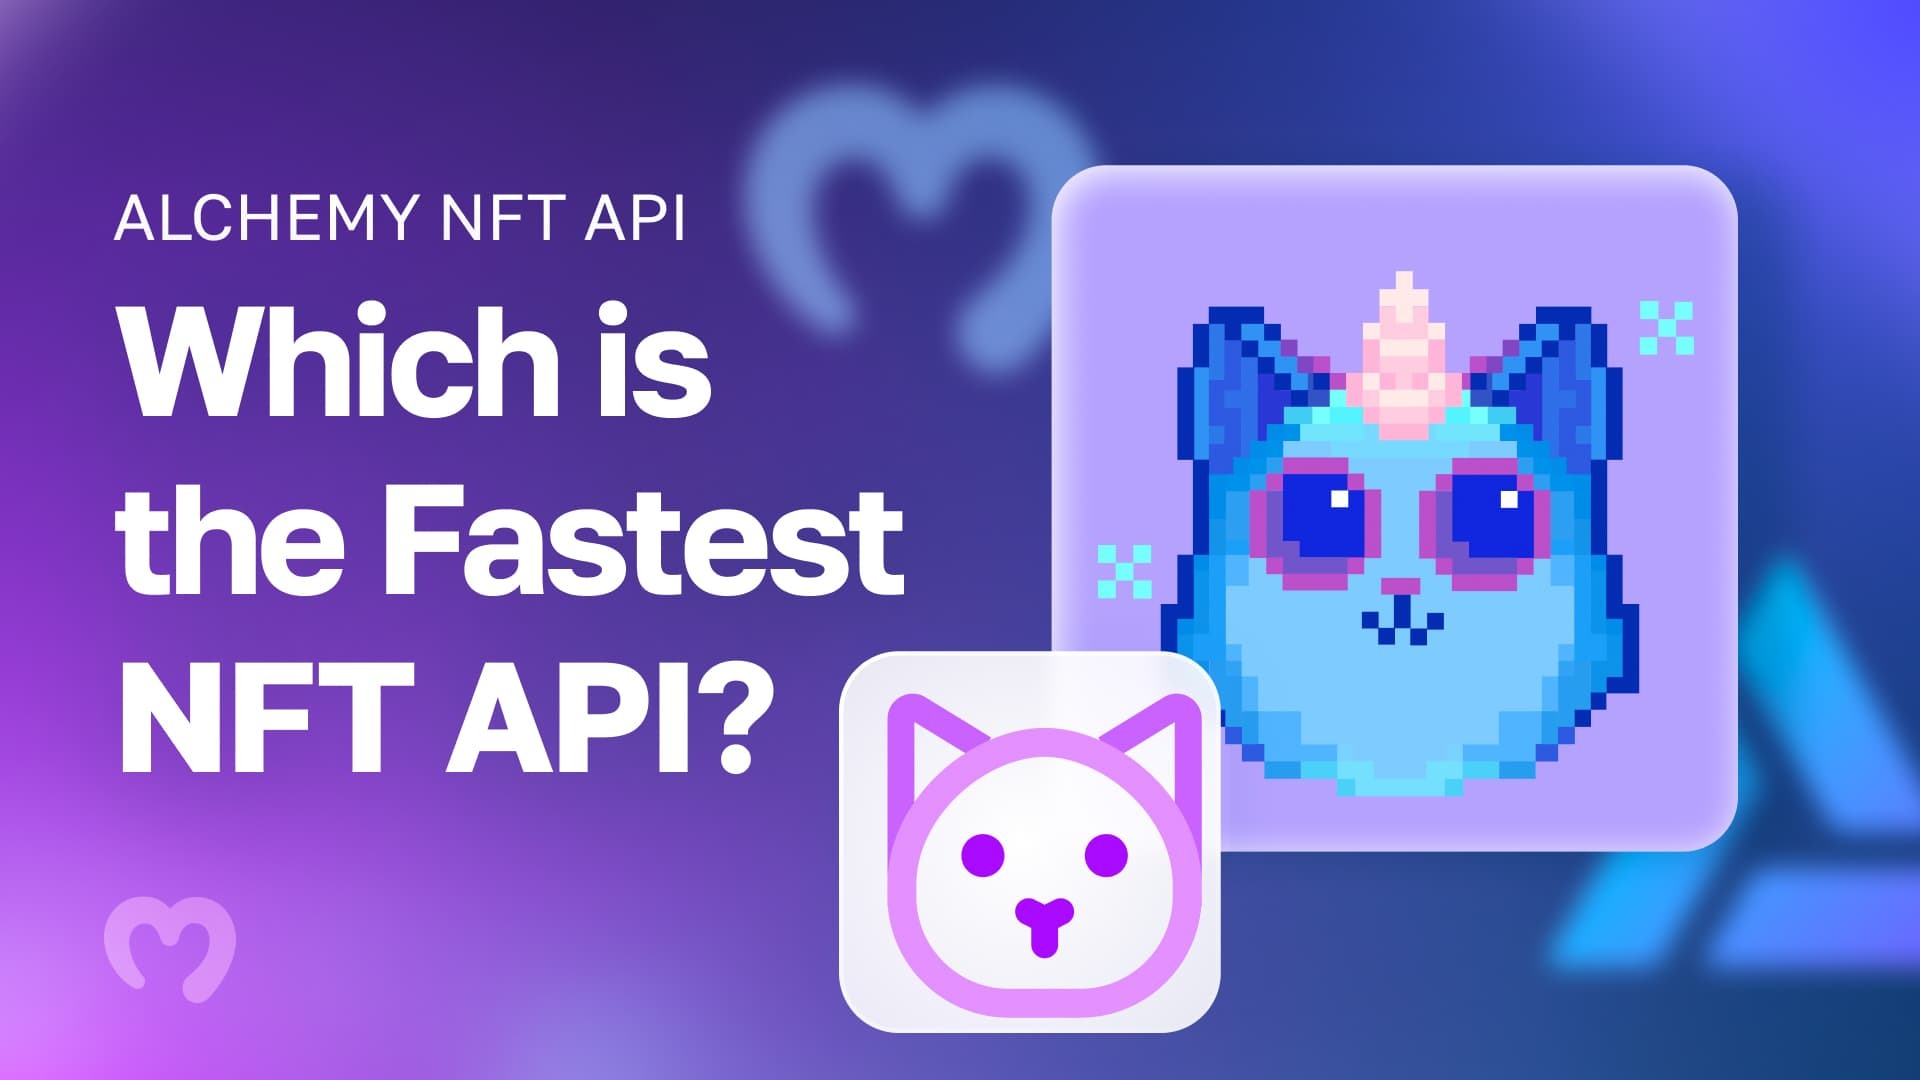 Alchemy NFT API - Which is the Fastest NFT API?